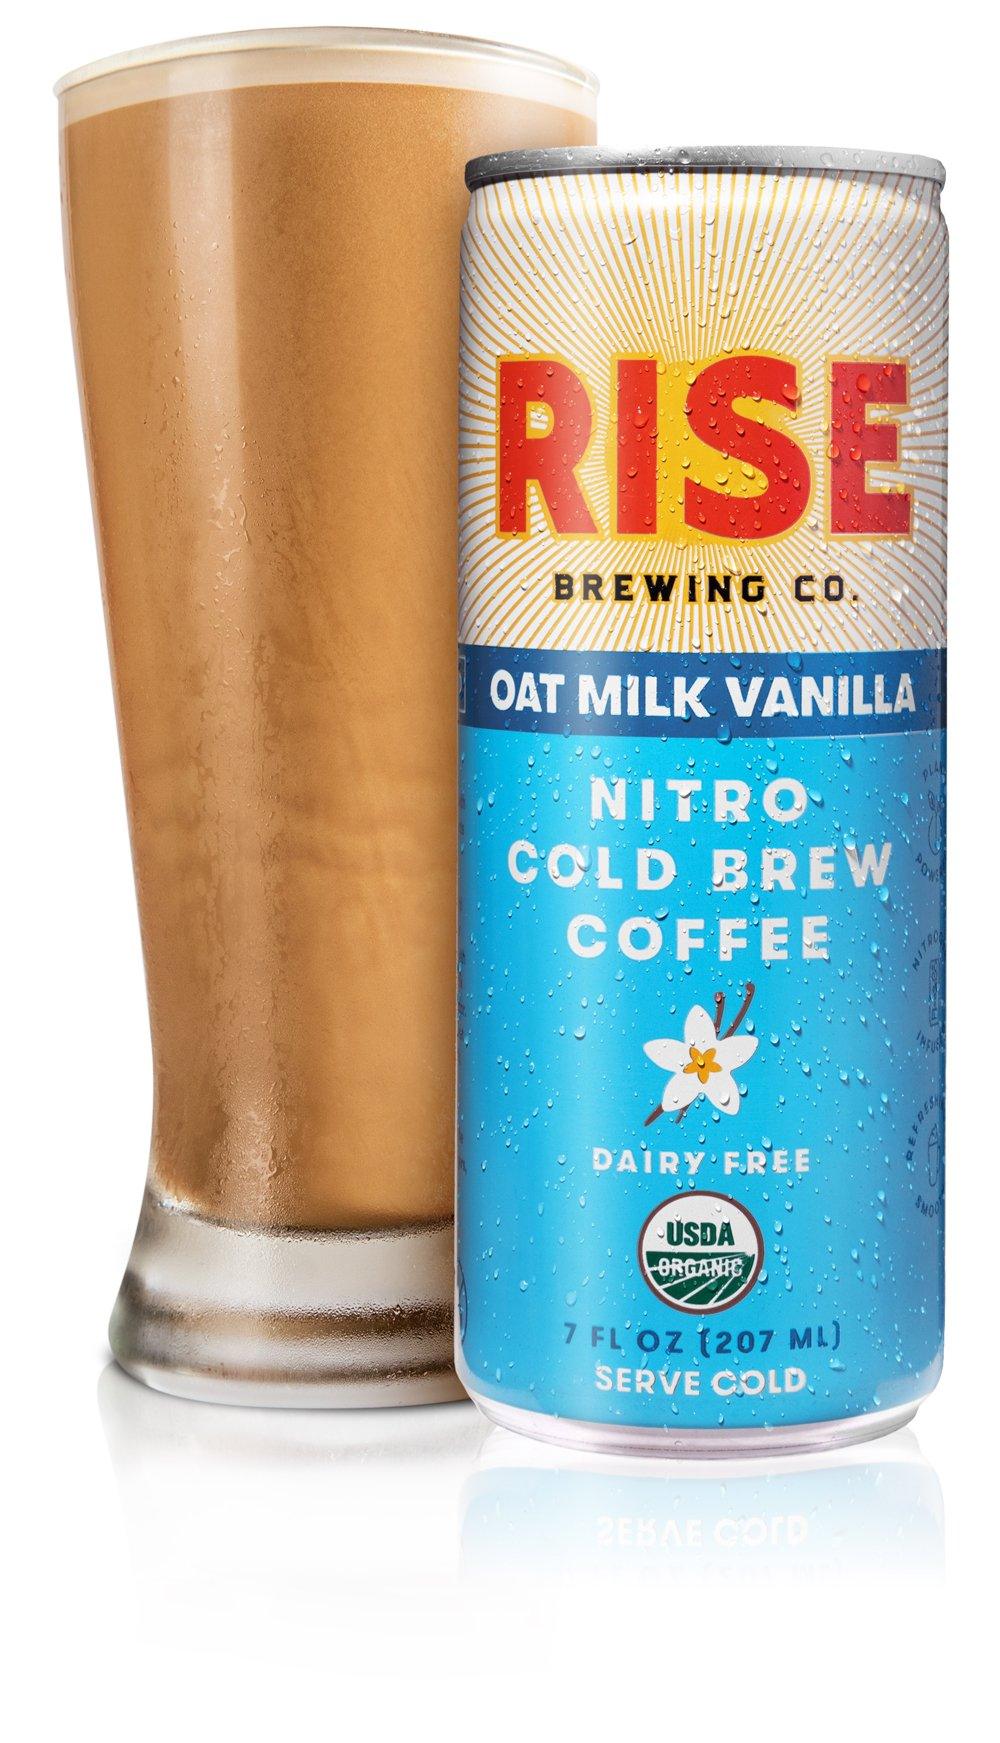 Original Black Nitro Cold Brew Coffee - Organic - Unsweetened - RISE  Brewing Co.